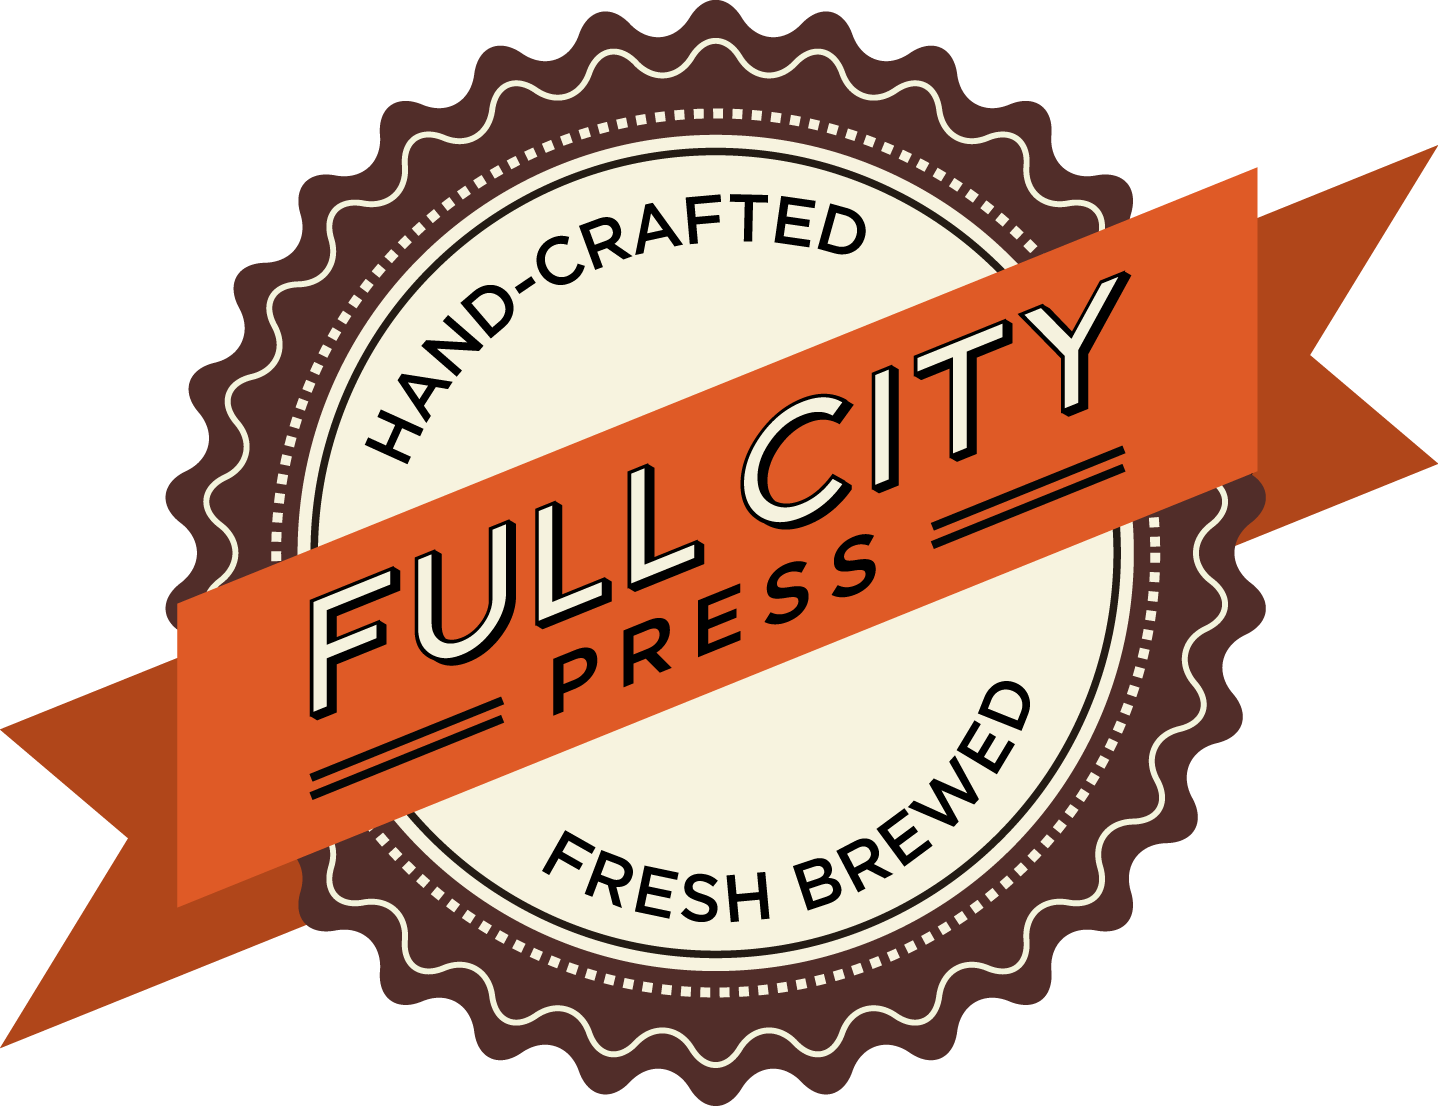 Full City Press